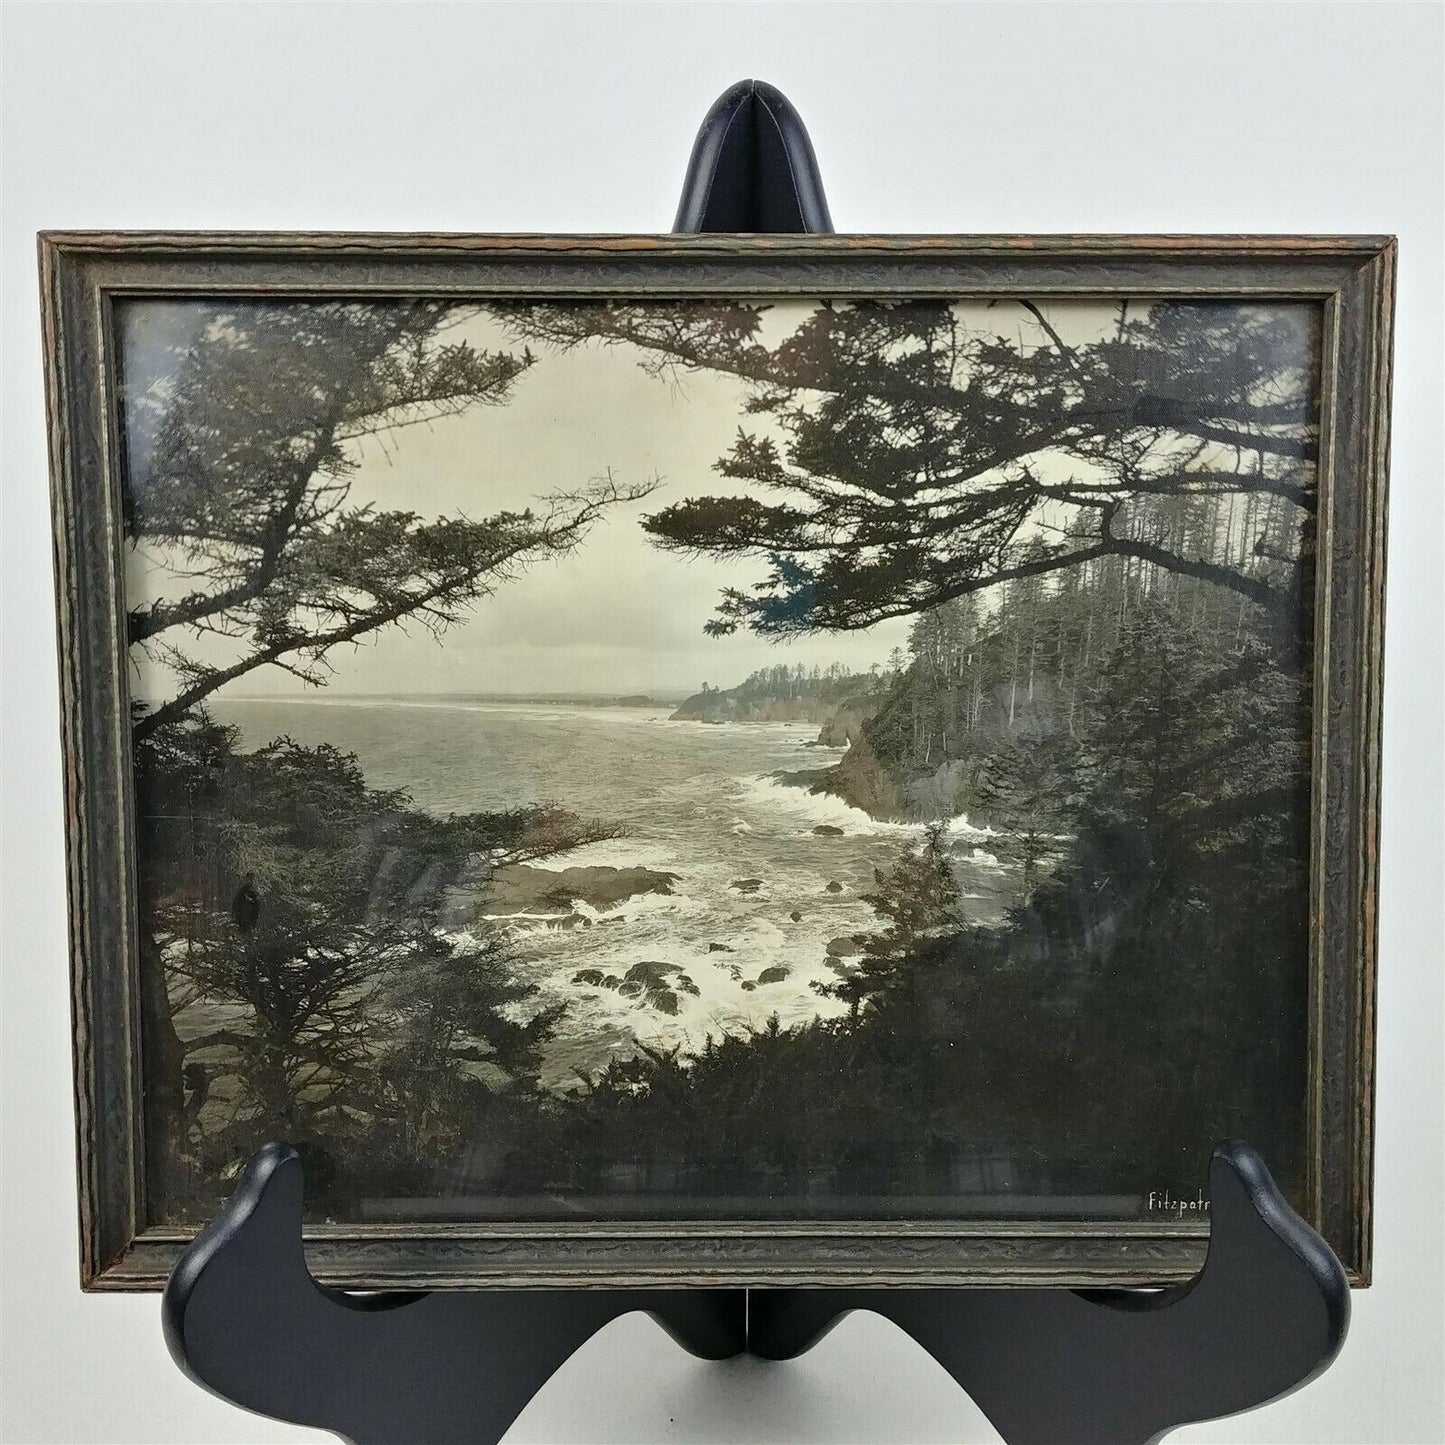 3 Charles Fitzpatrick Framed Art Black & White, Hand Colored, Print Ocean, Falls